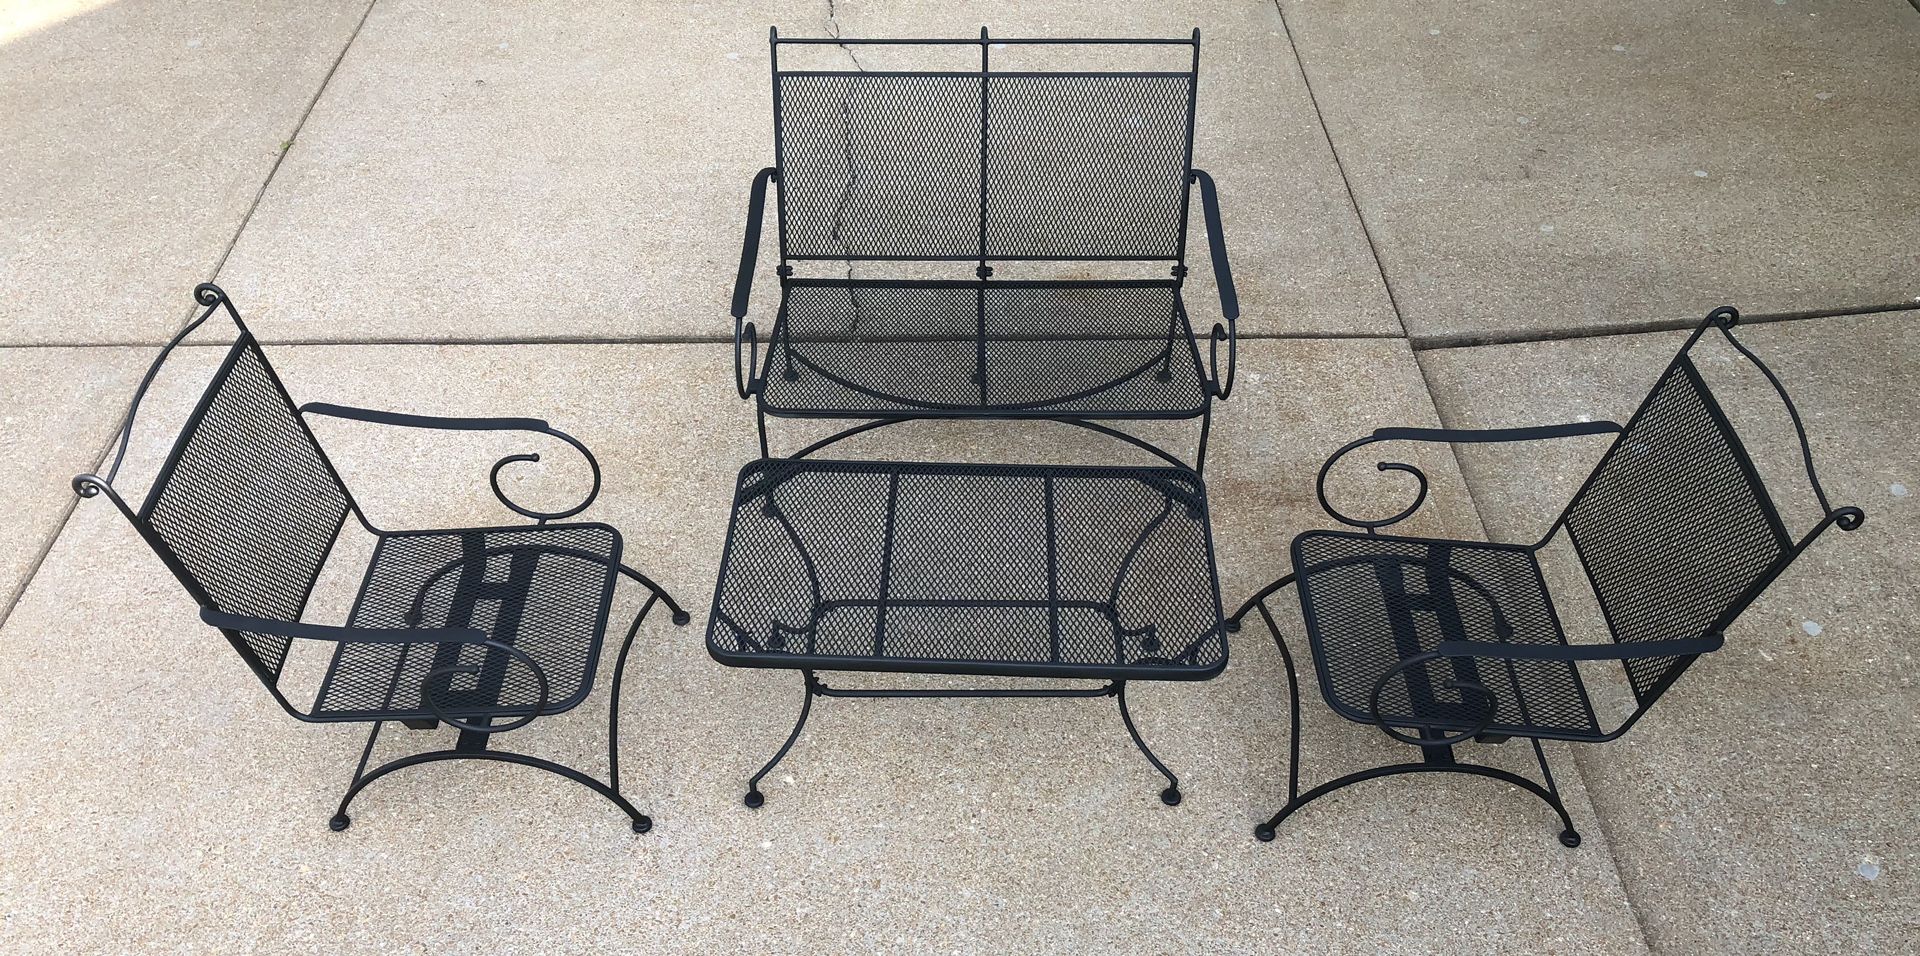 Wrought Iron Outdoor Patio Furniture 4 Seat Lounge Conversation Set-Rocker Chairs